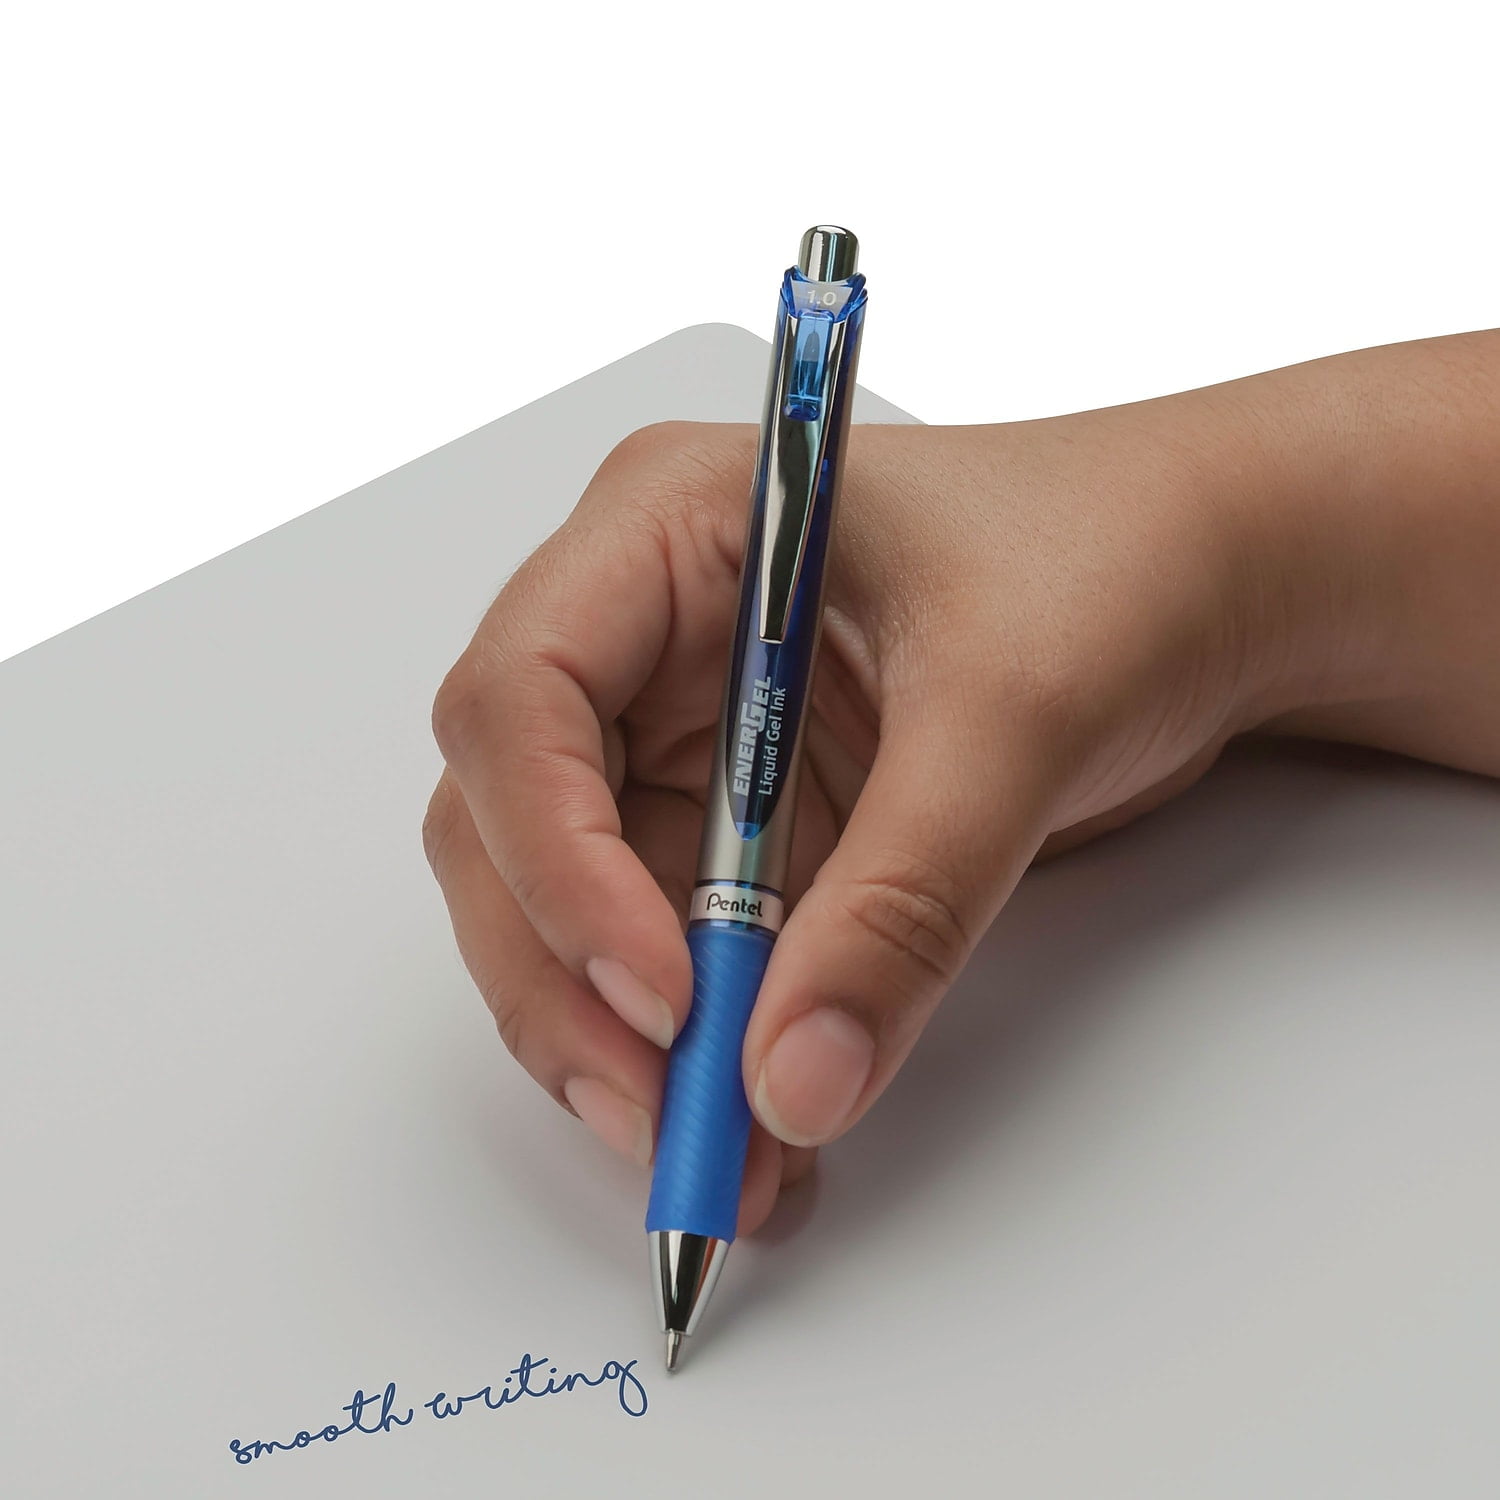 Pentel Energel Rtx Retractable Liquid Gel Pen, Bold Line, Metal Tip, Blue  Ink Pack of 2 (BL80BP2C) 